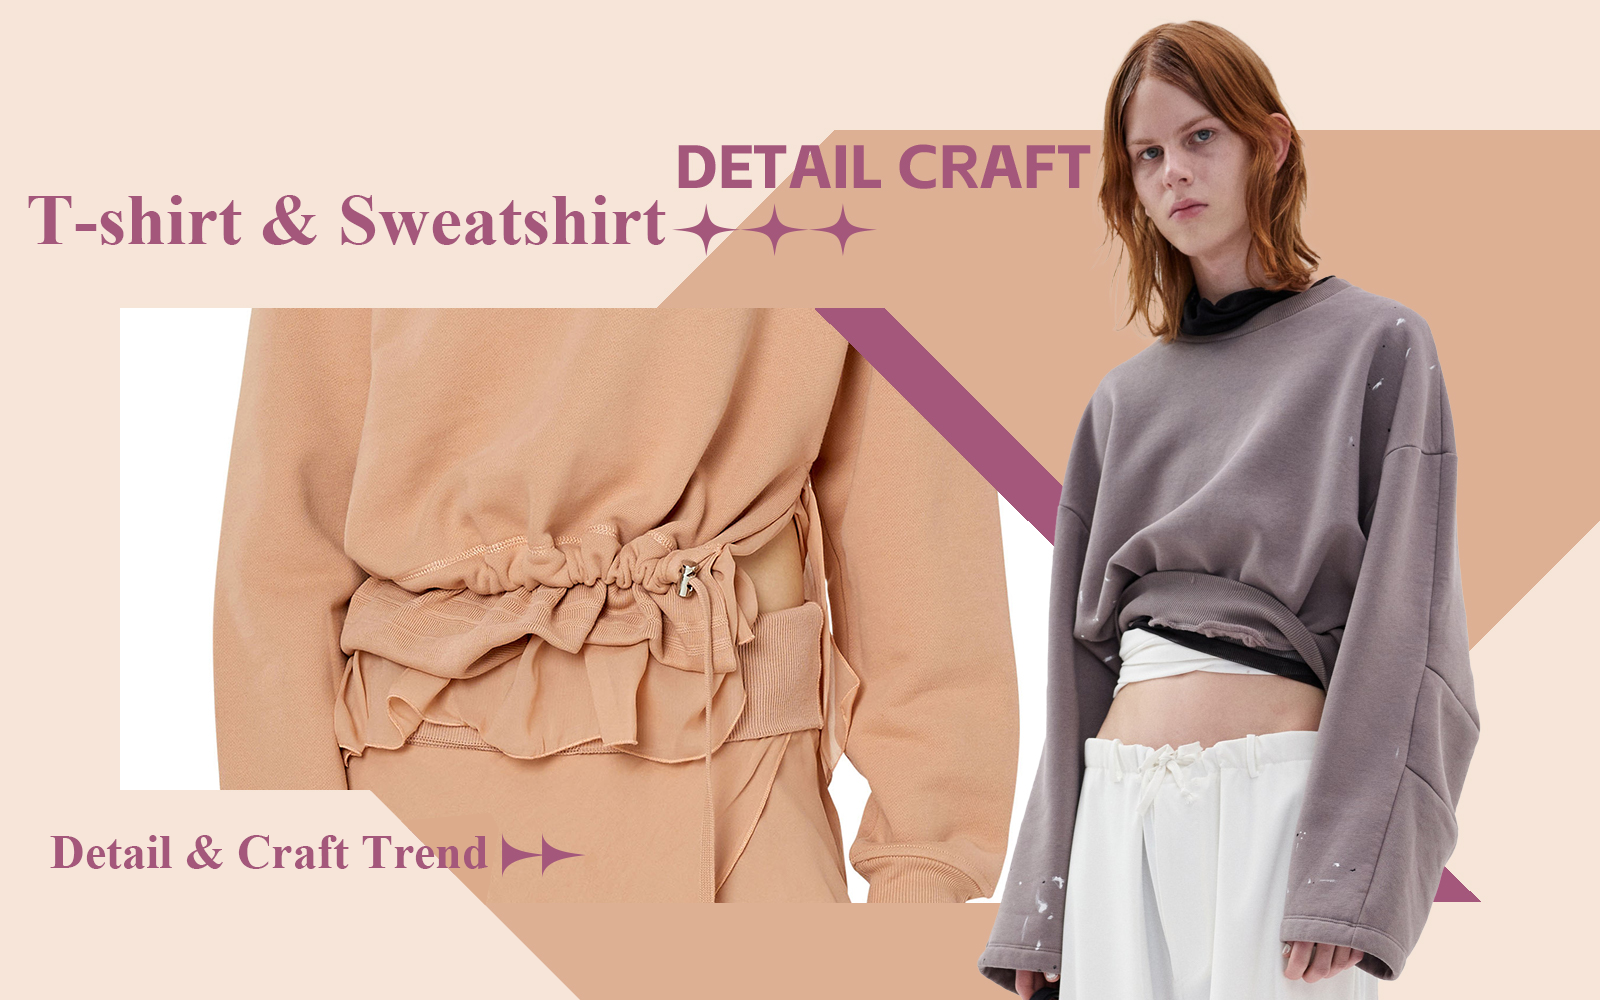 The Detail & Craft Trend for Women's T-shirt & Sweatshirt